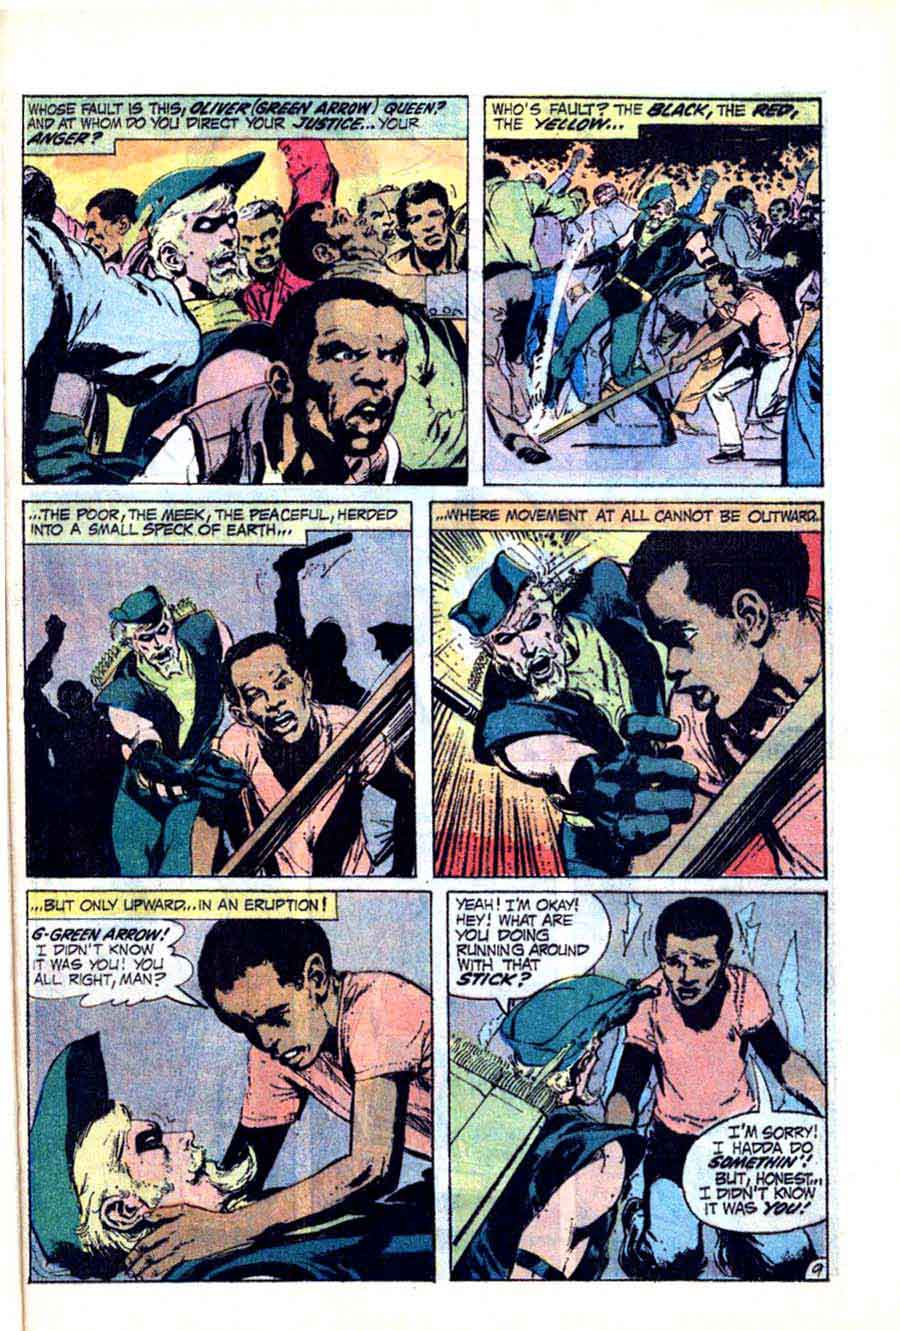 Green Lantern Green Arrow #87 bronze age 1970s dc comic book page art by Neal Adams